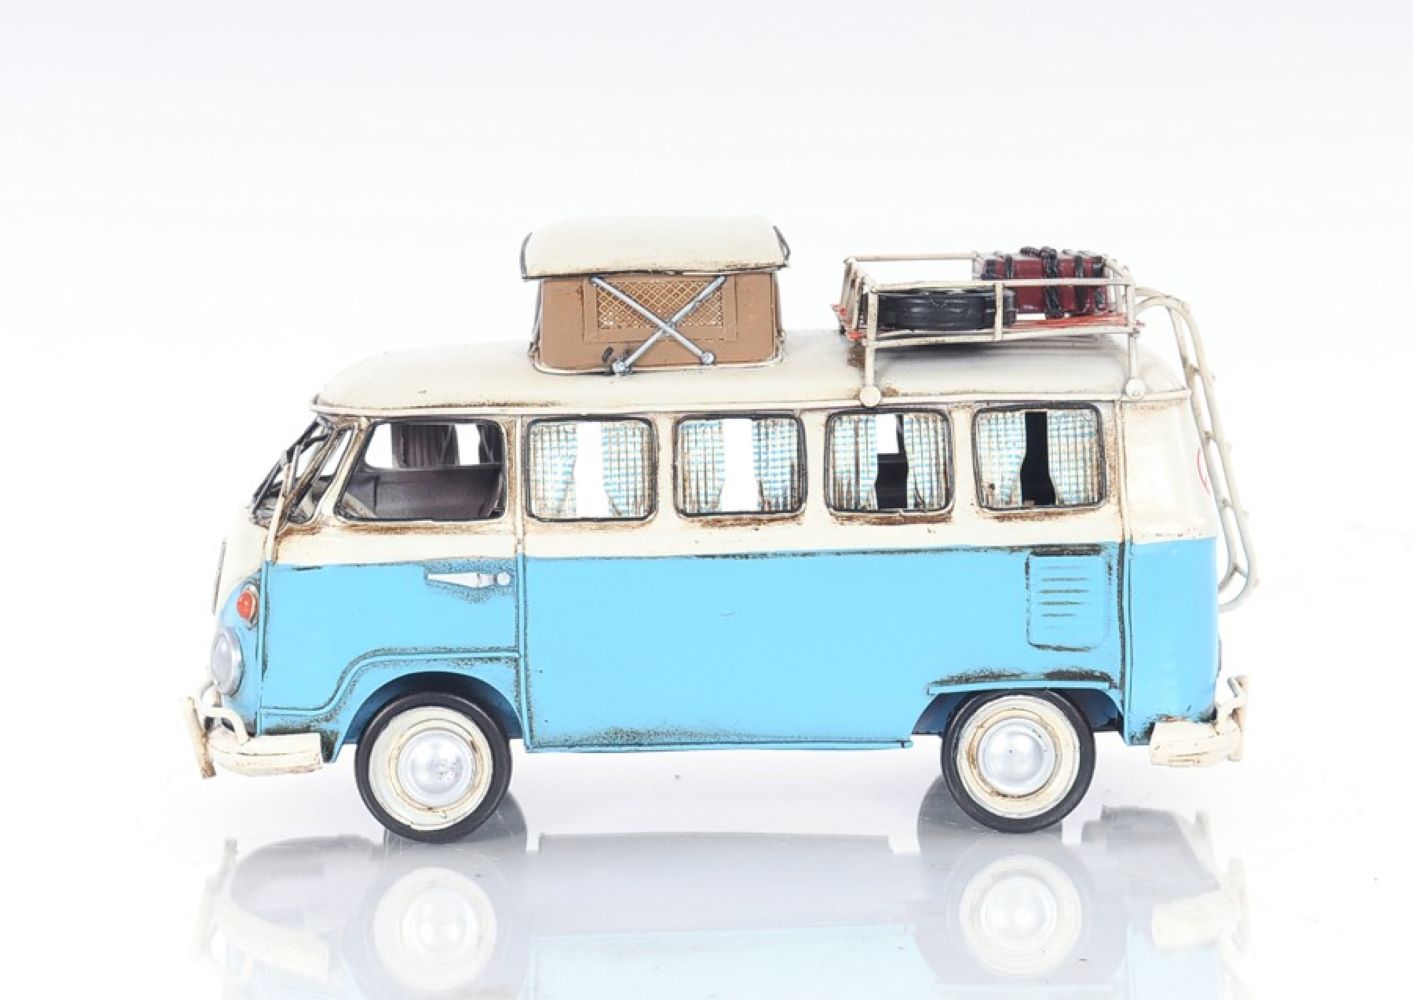 6" Blue And White Metal Volkswagen Bus Sculpture